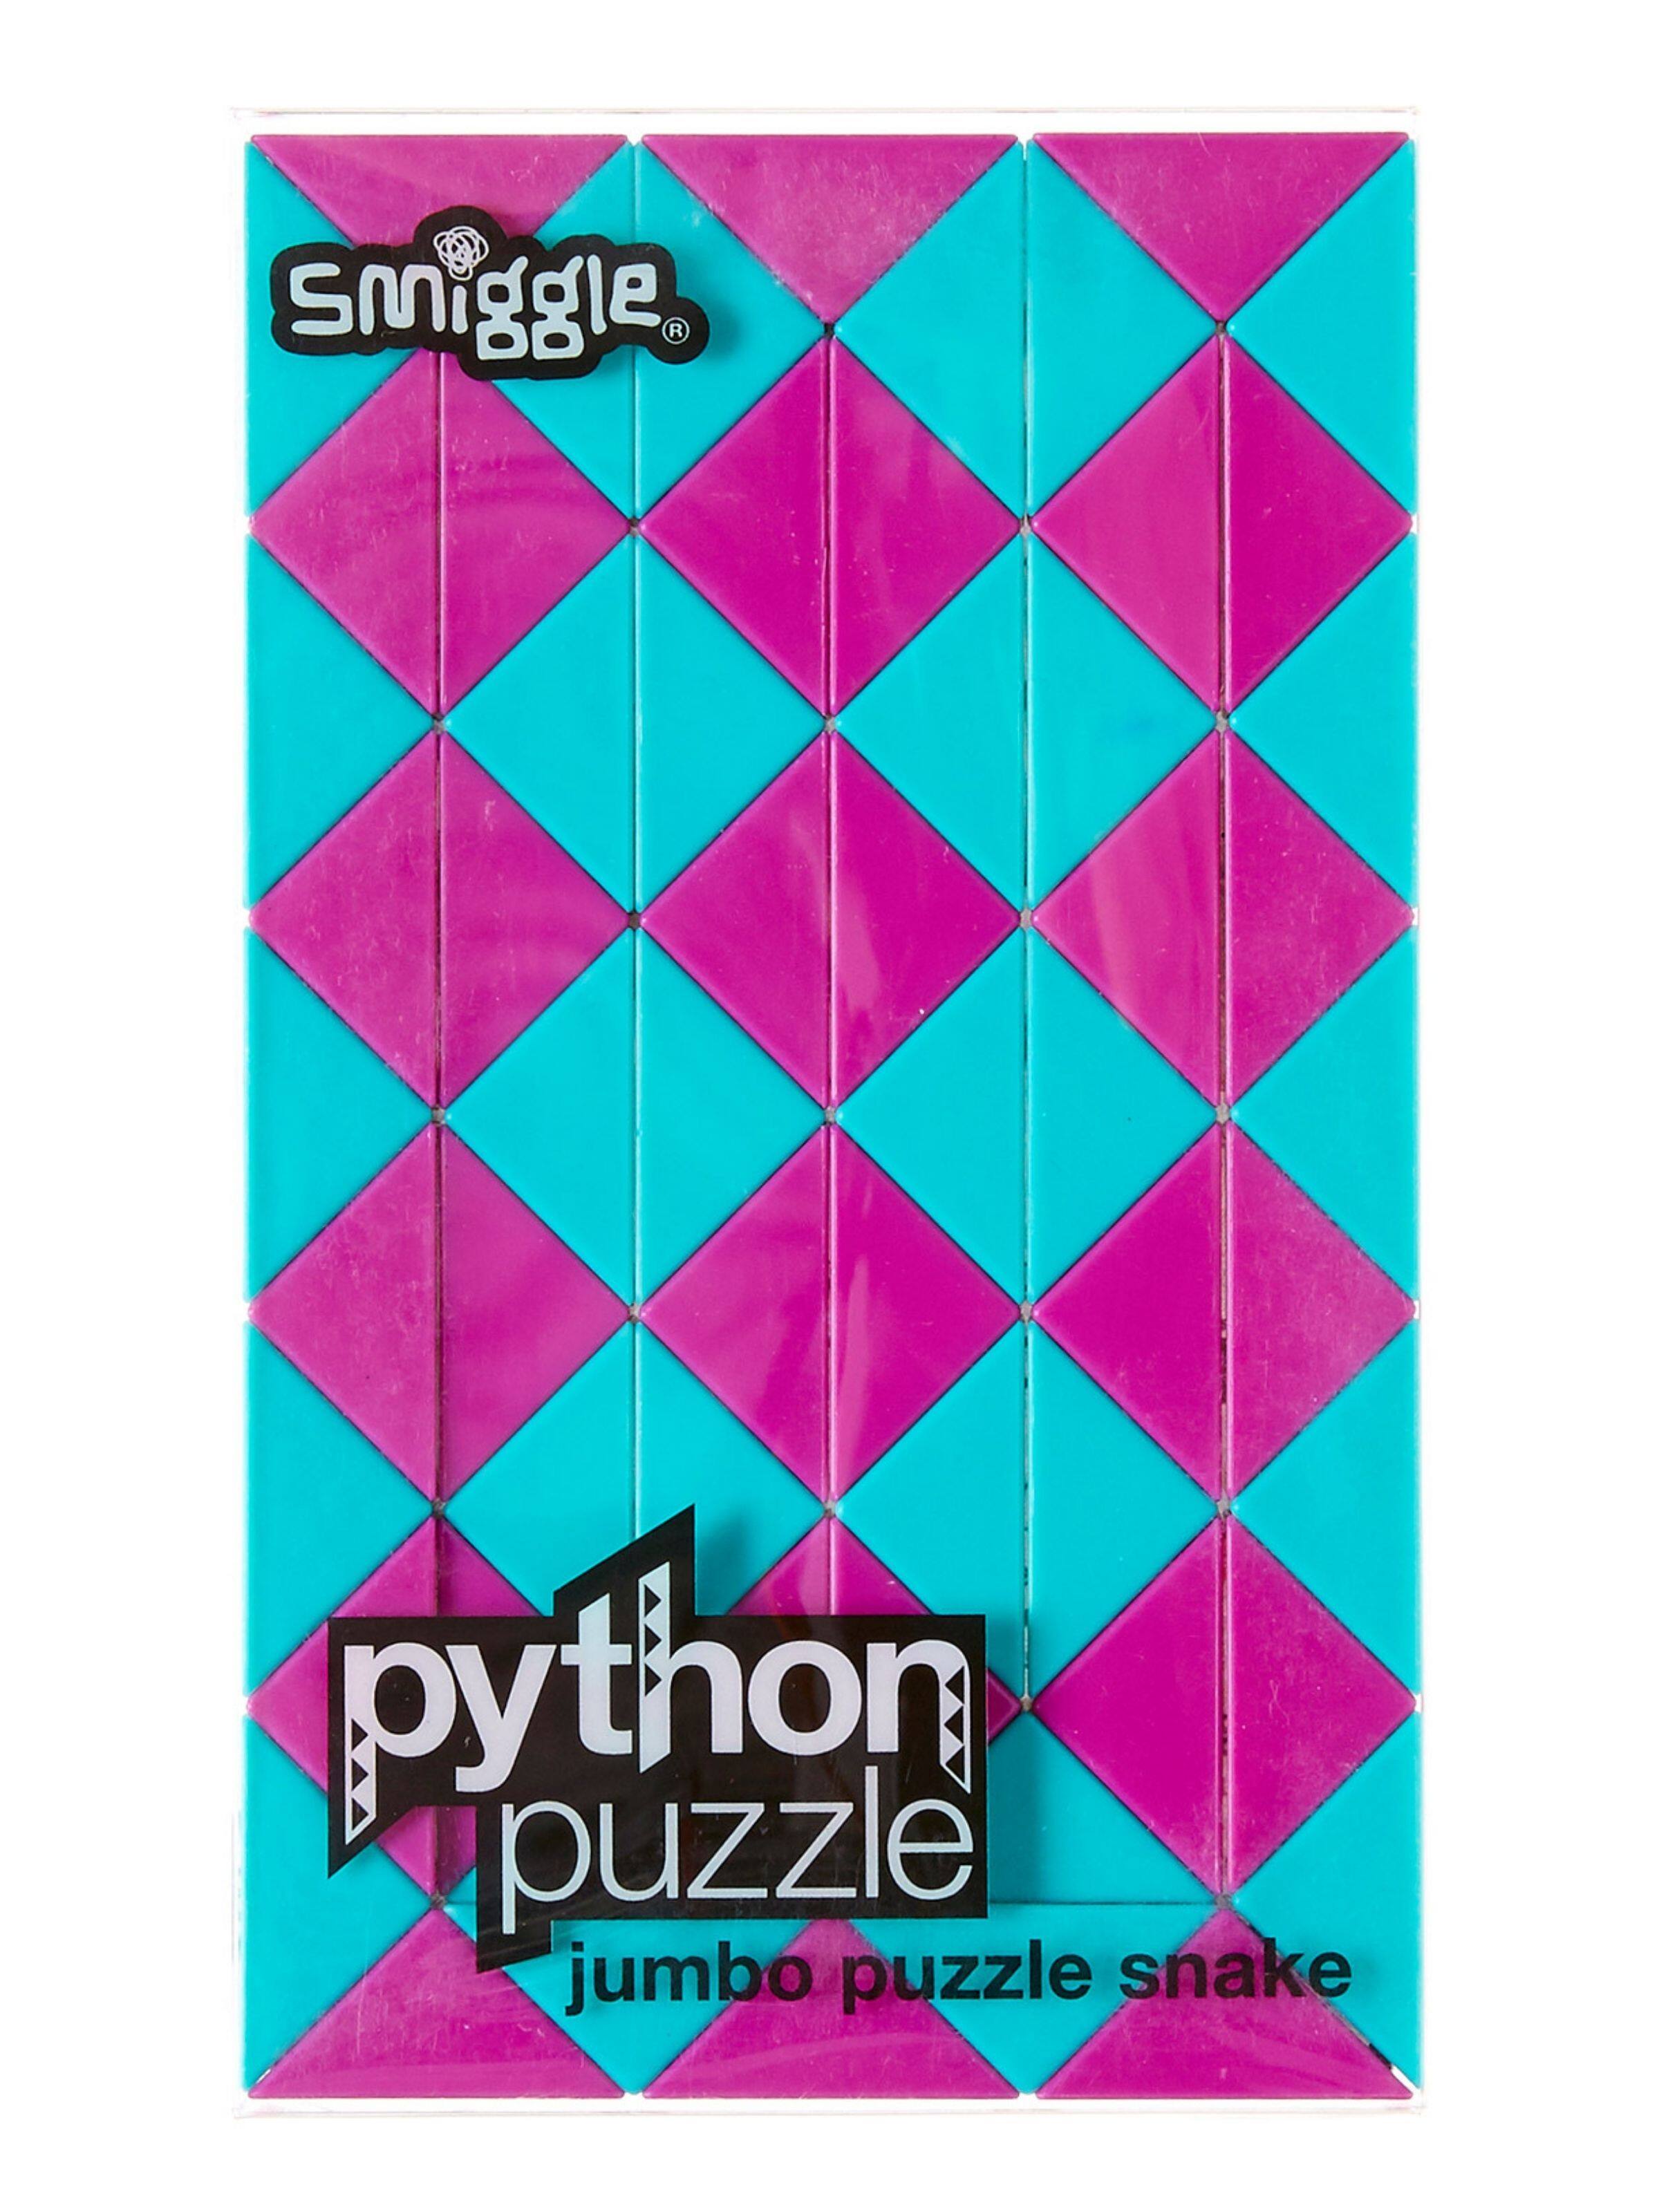 Python Puzzle Game